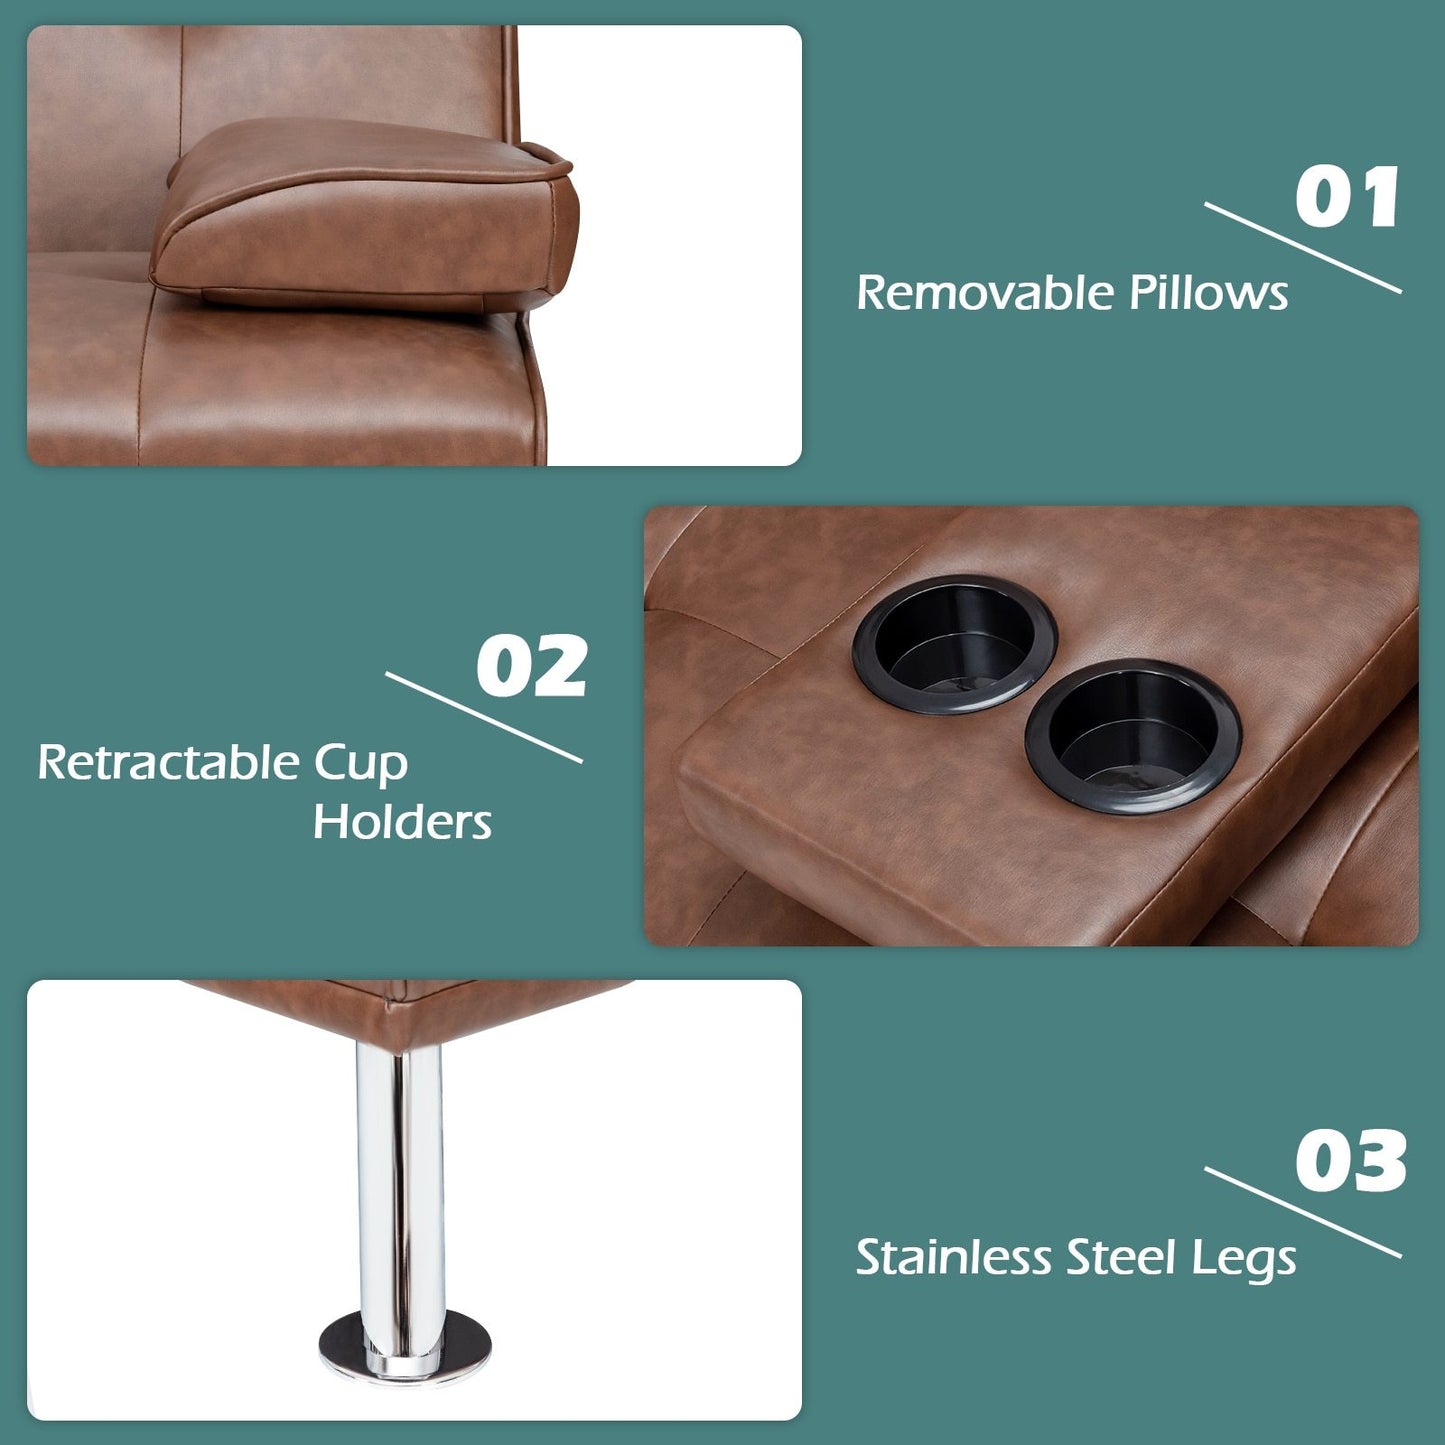 3-Piece Convertible Sectional Sofa